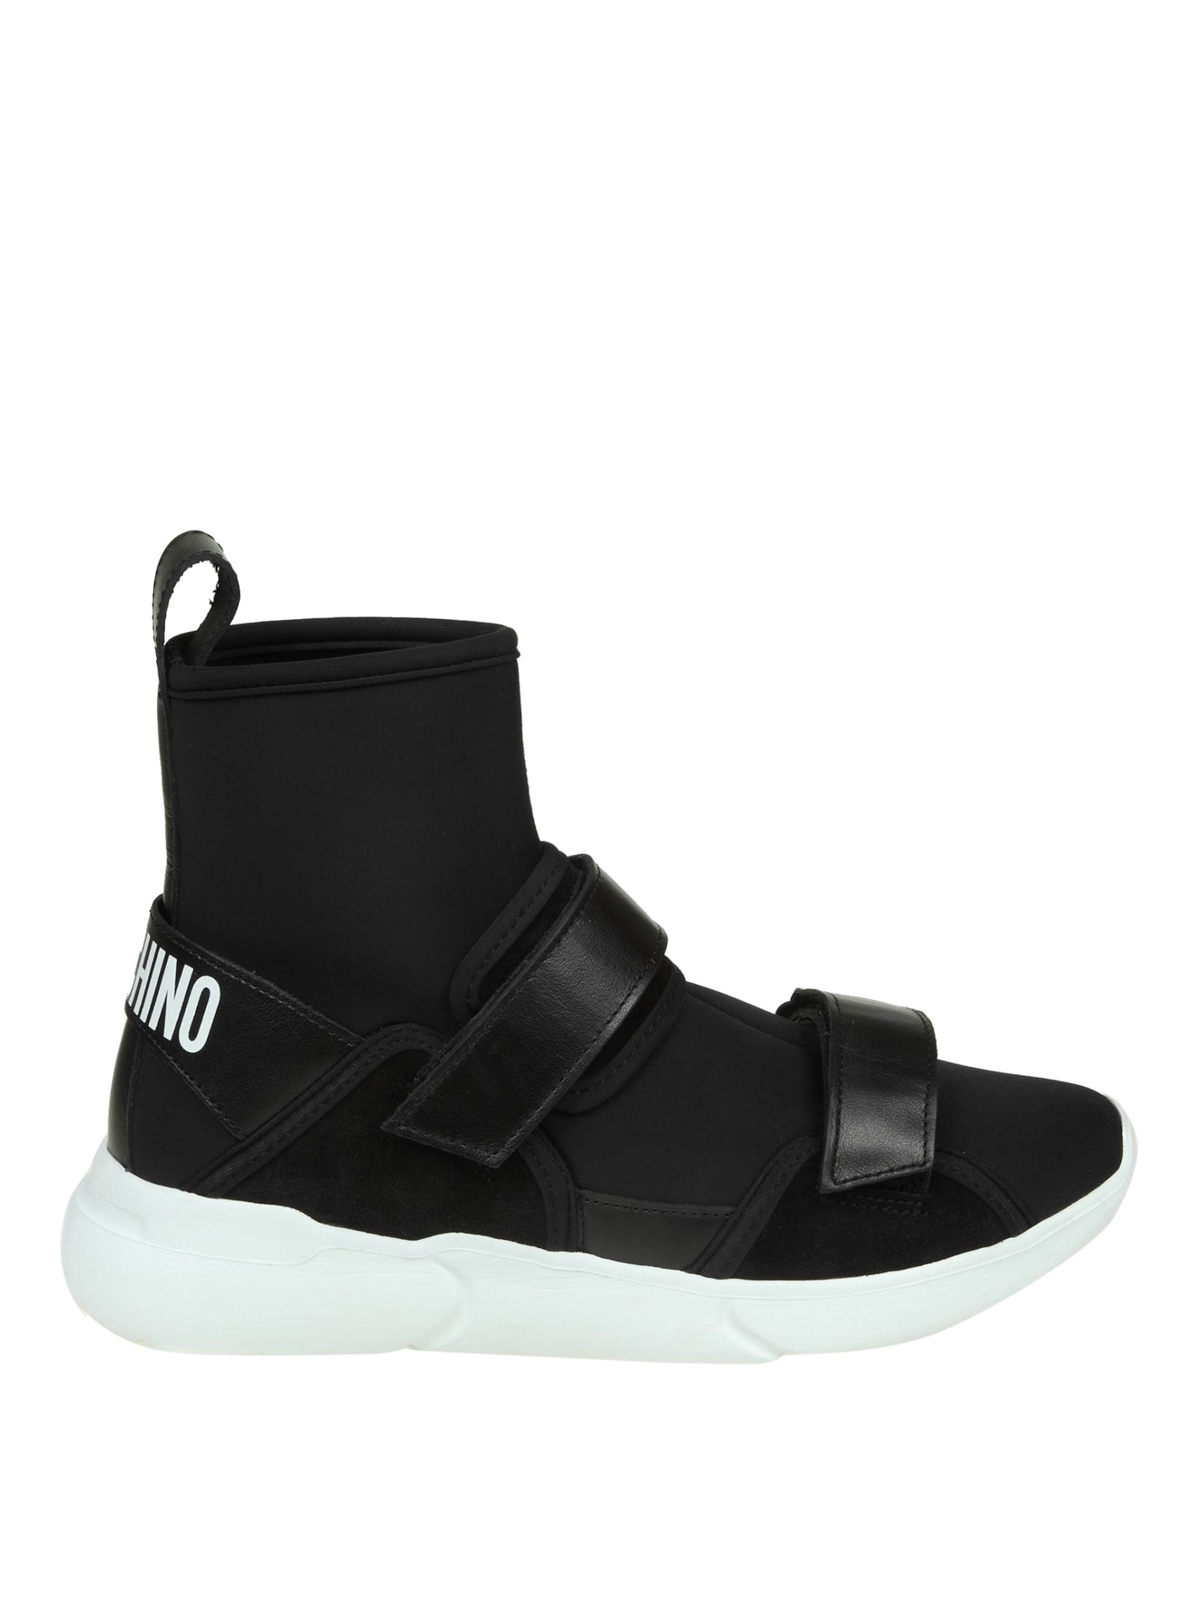 Moschino - Neoprene sock sneakers with 